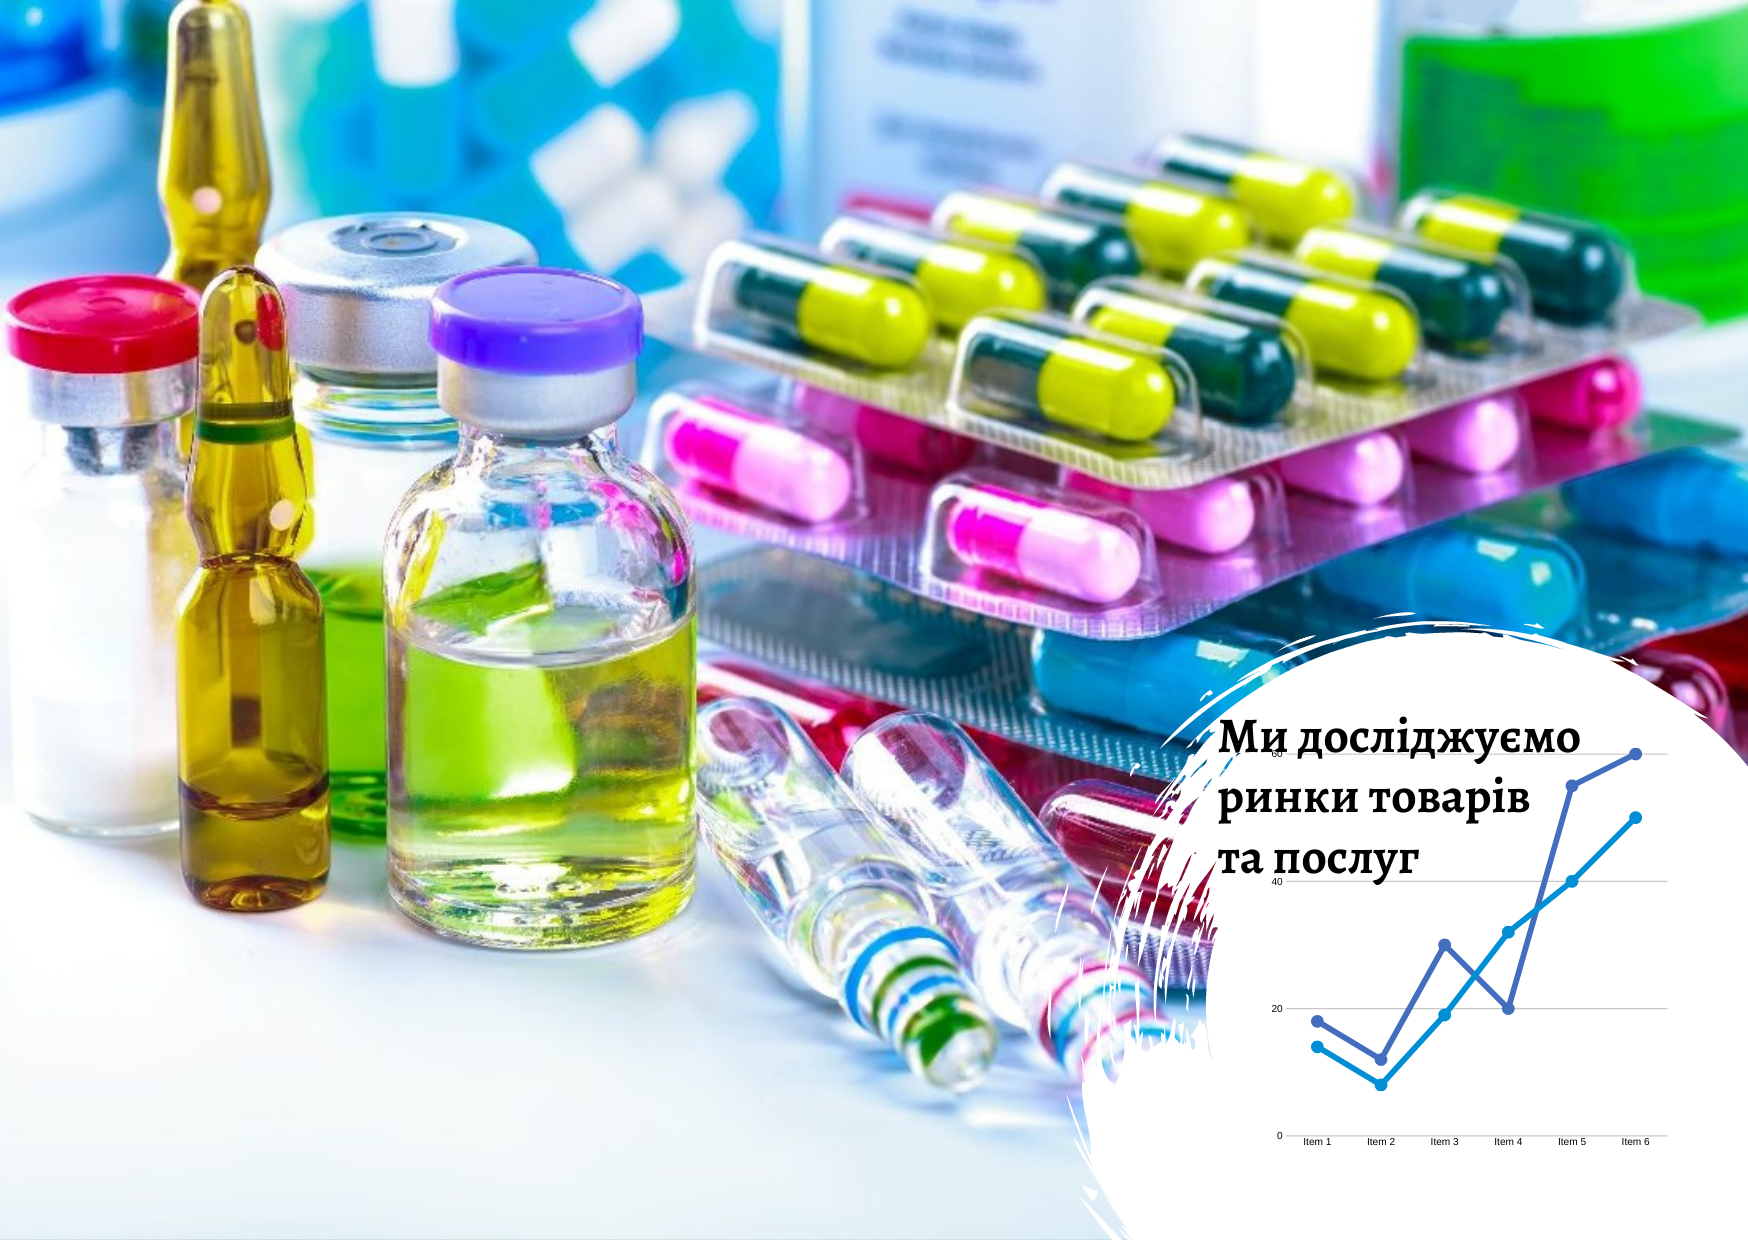 Ukrainian pharmaceutical market – research report